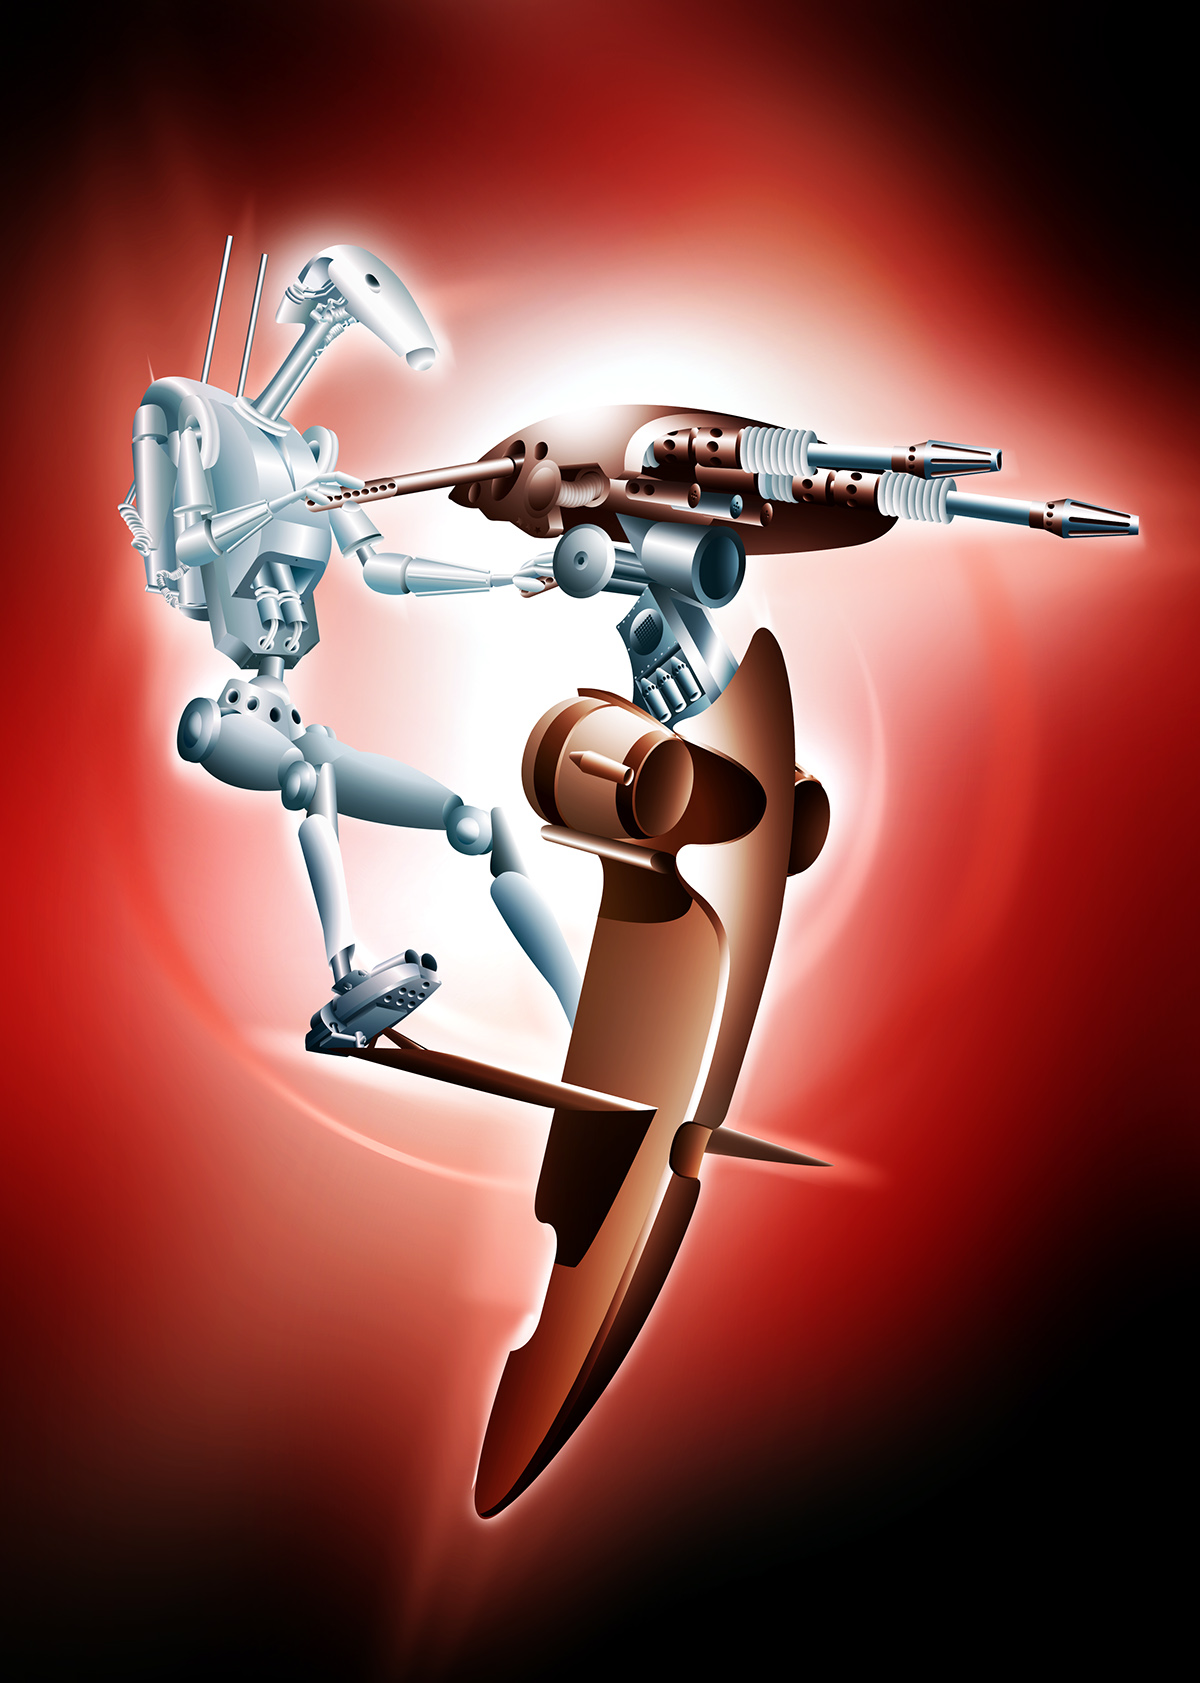 Adobe Portfolio star wars Star Wars movie robots illustrations adobe illustrator computer arts